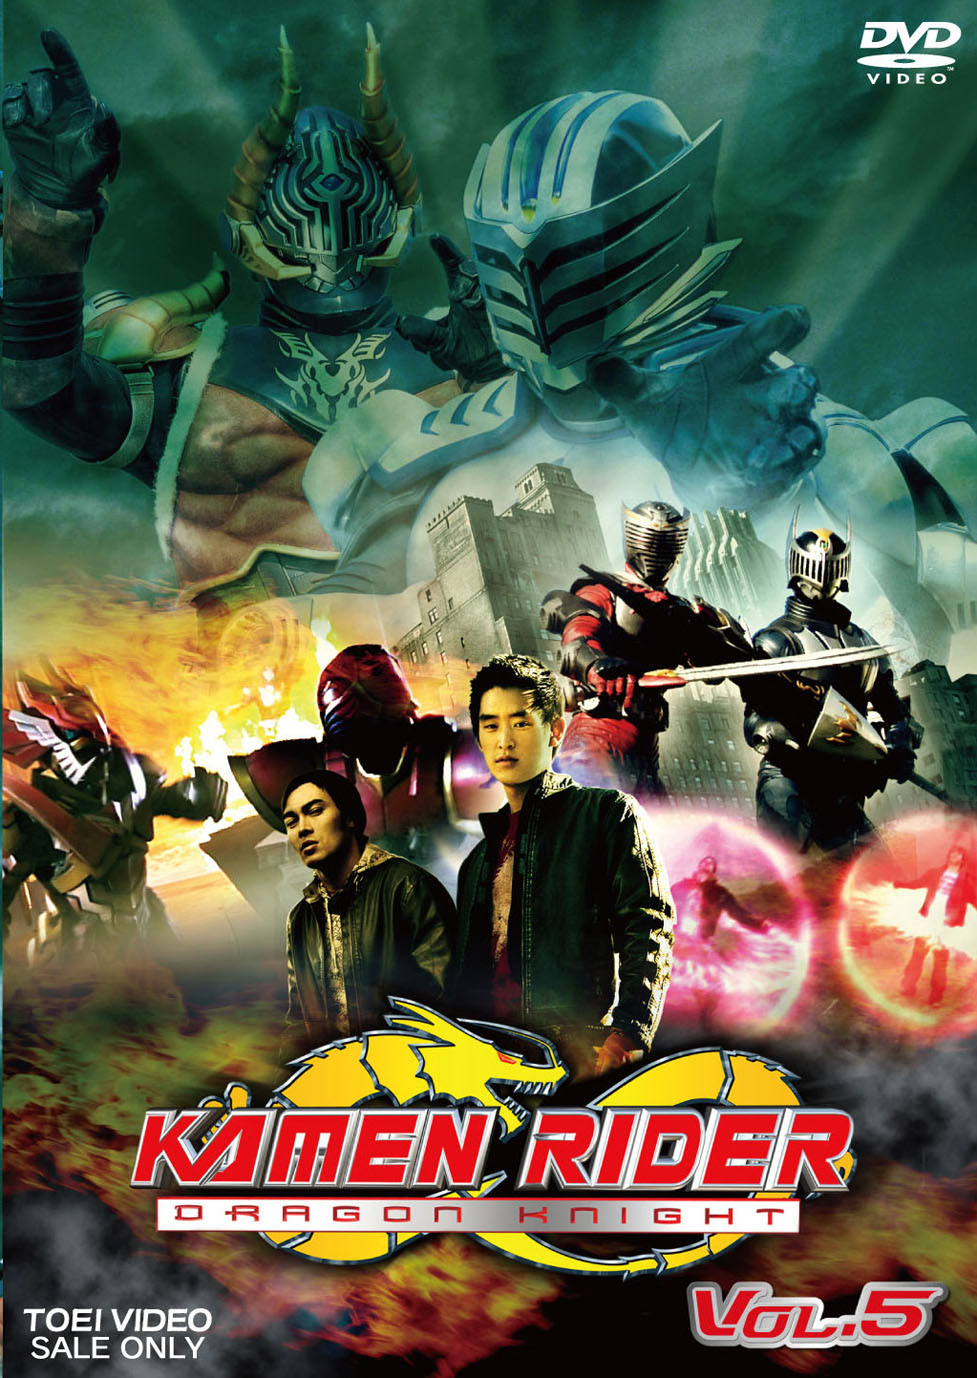 KAMEN RIDER DRAGON KNIGHT Vol.5